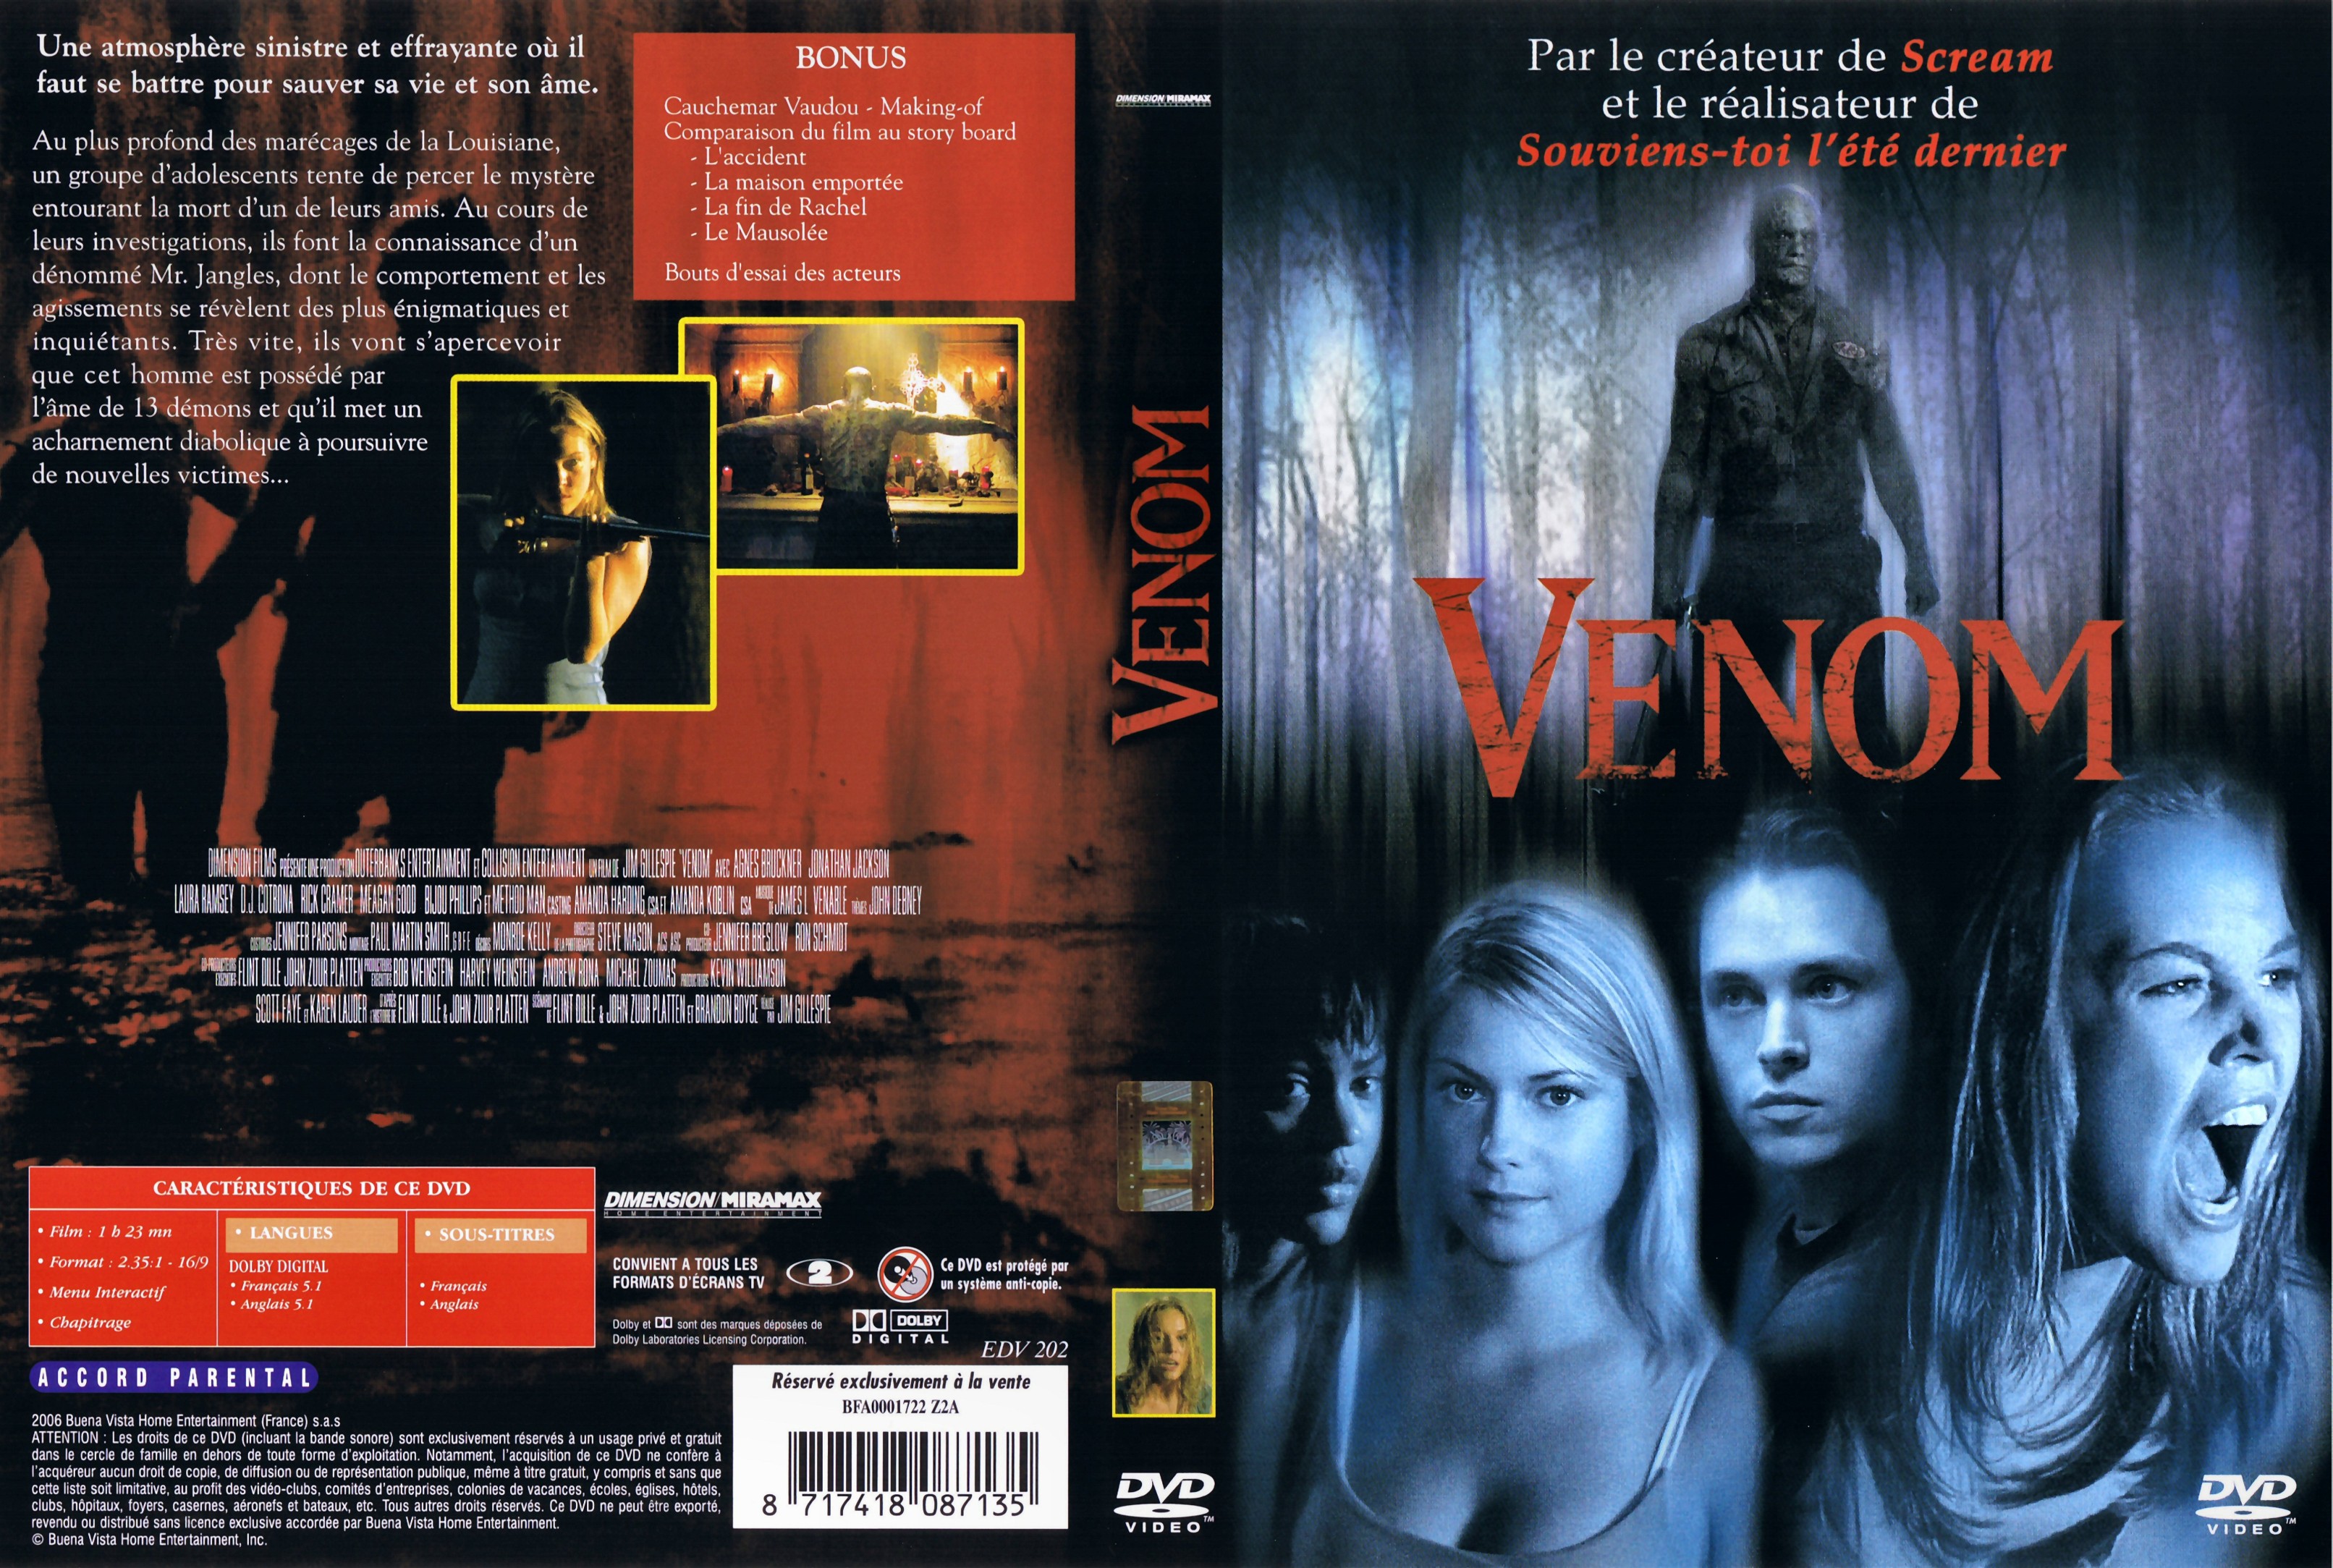 Jaquette DVD Venom